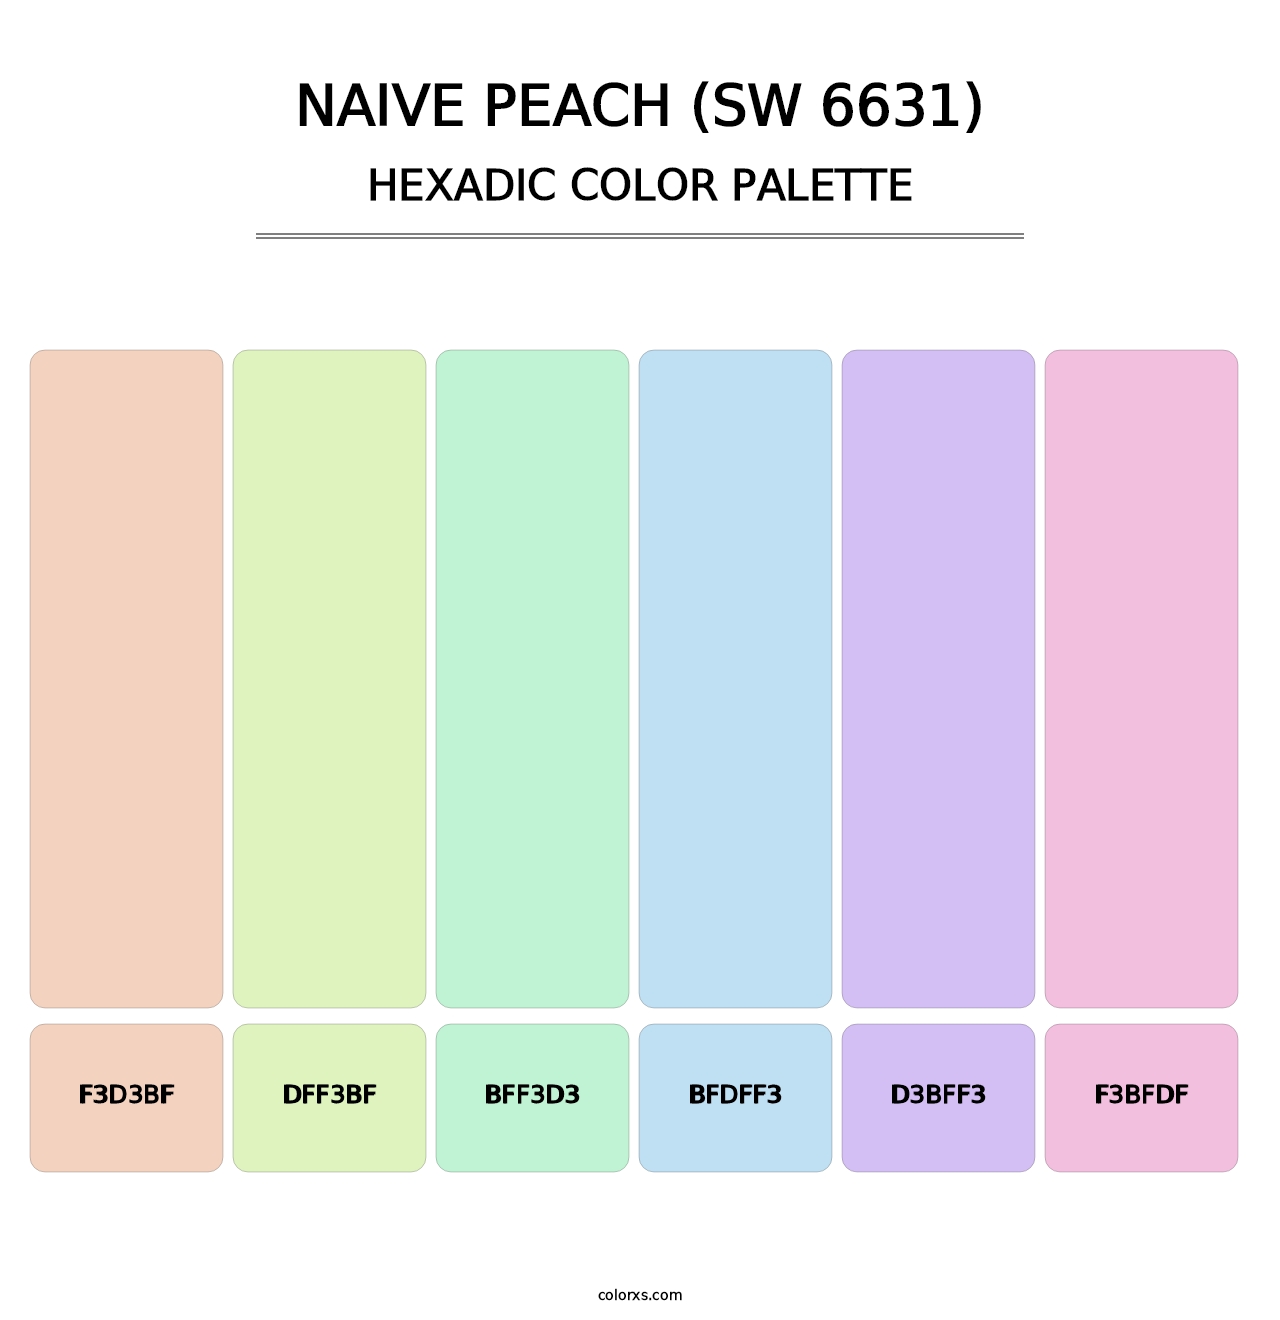 Naive Peach (SW 6631) - Hexadic Color Palette